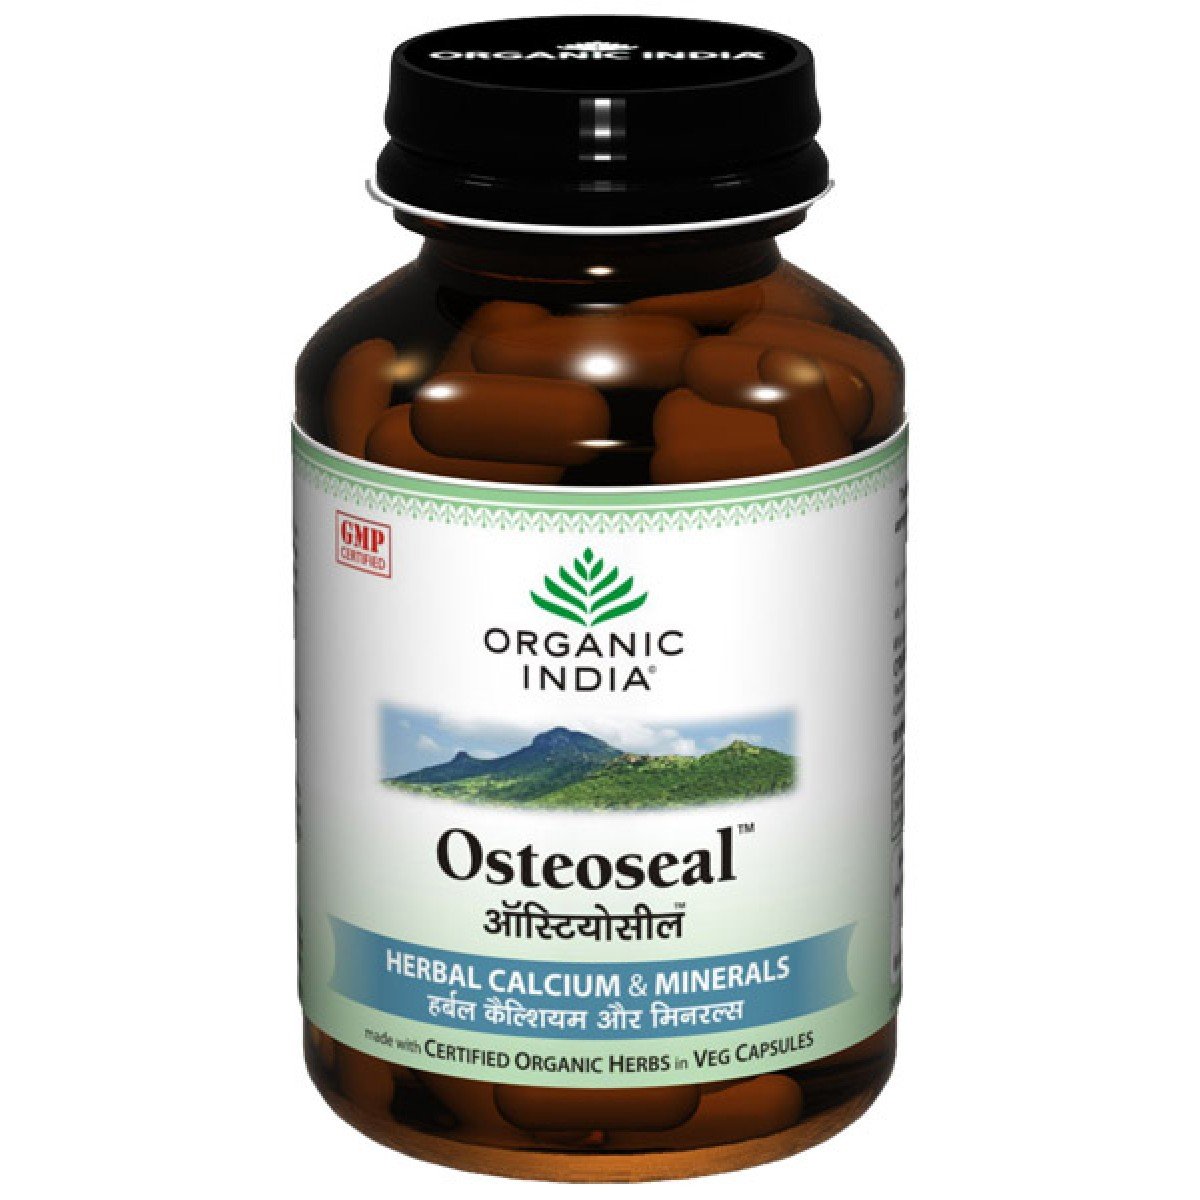 Osteoseal